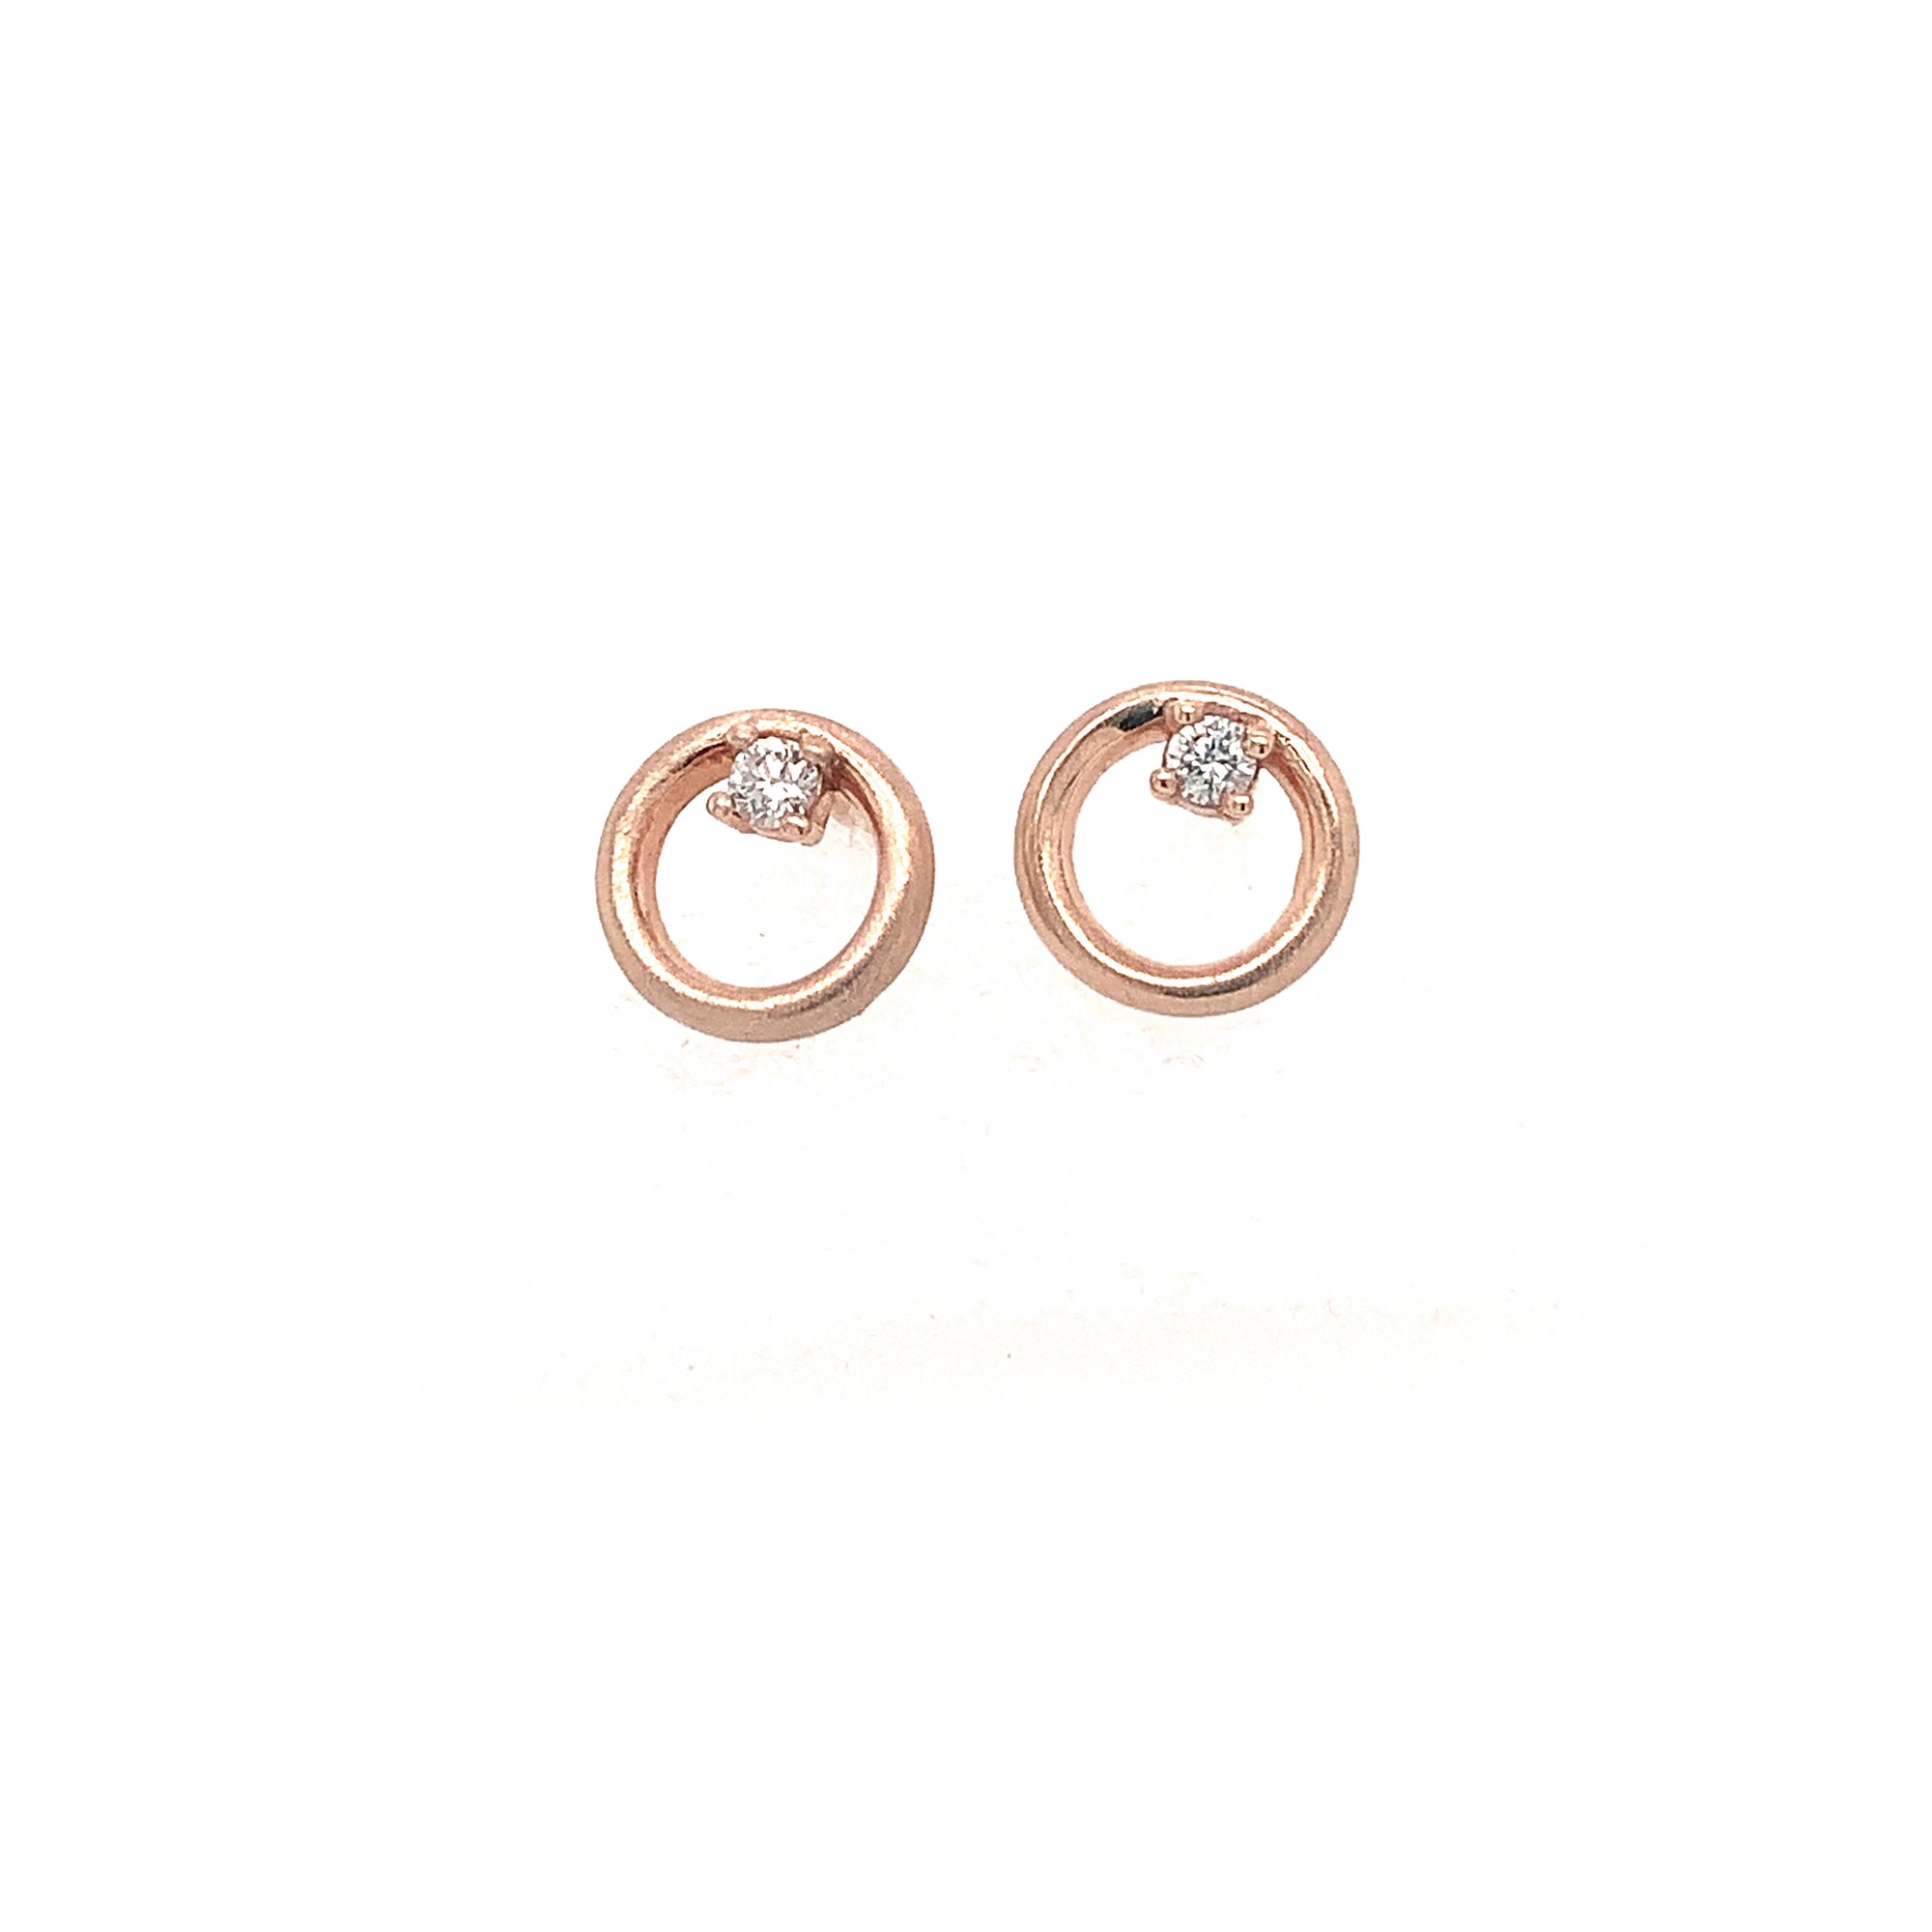 14k rose gold OKAY earrings with dimaonds